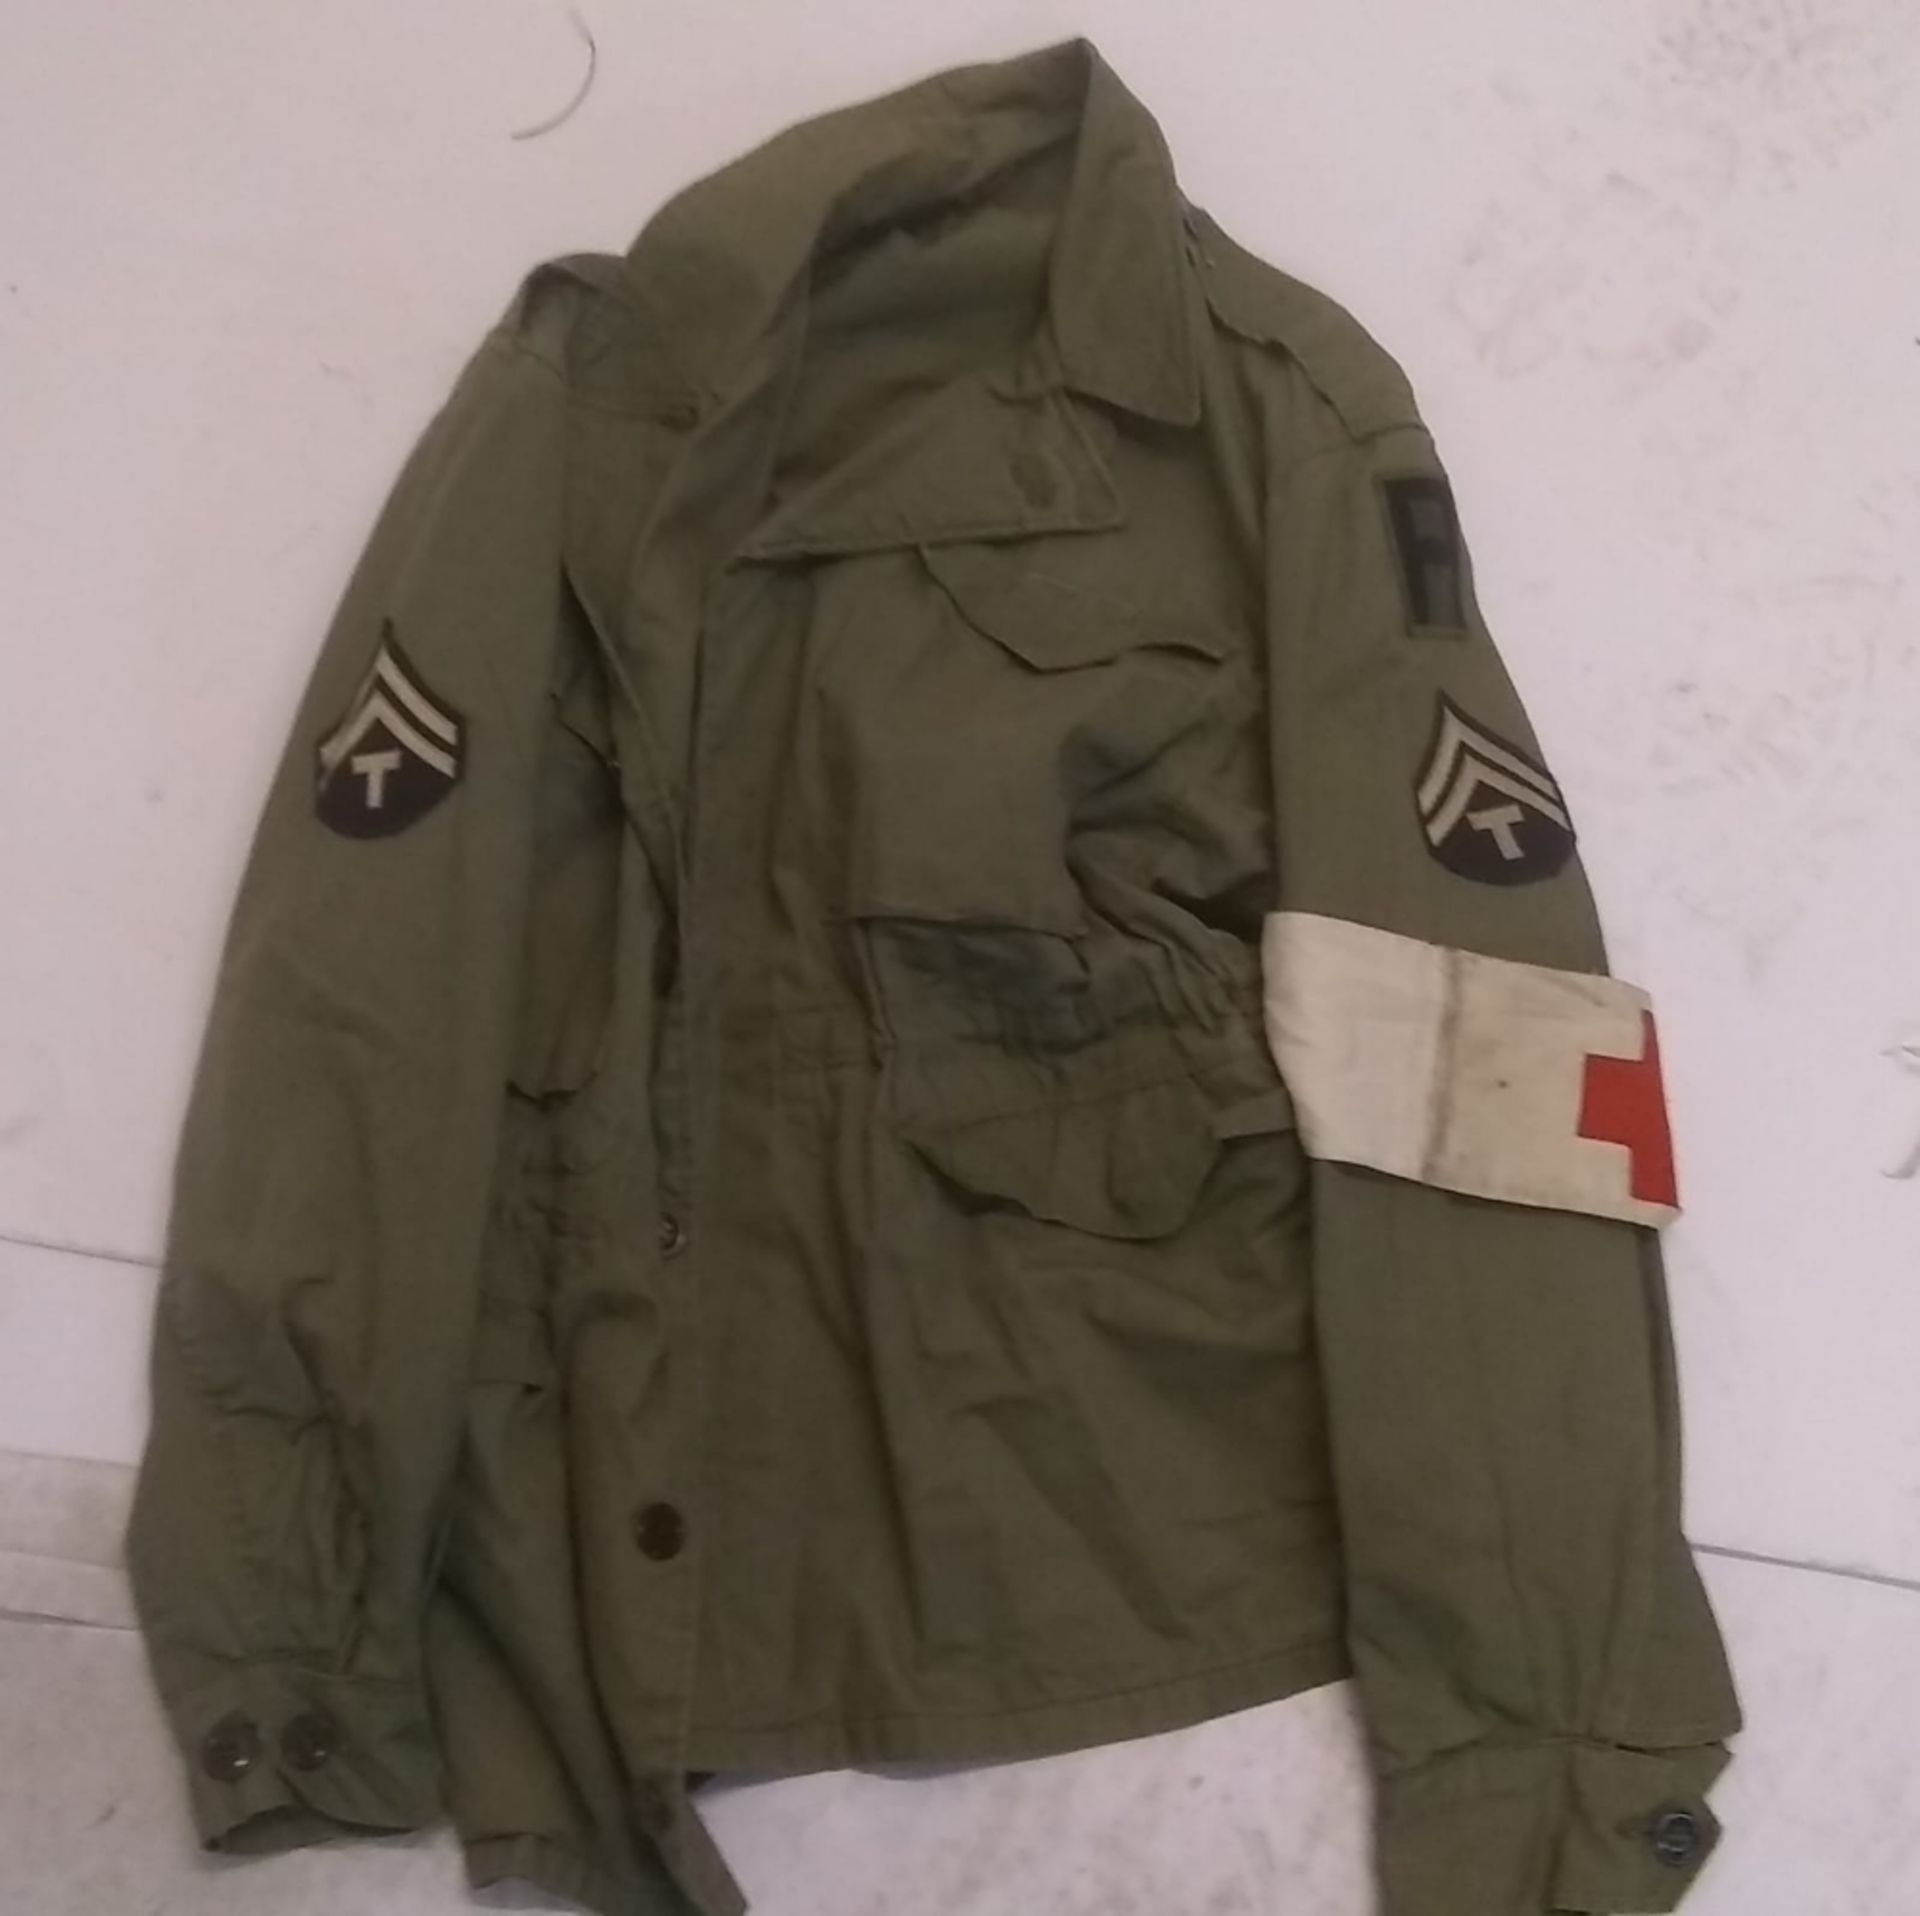 A reproduction US M43 combat jacket.